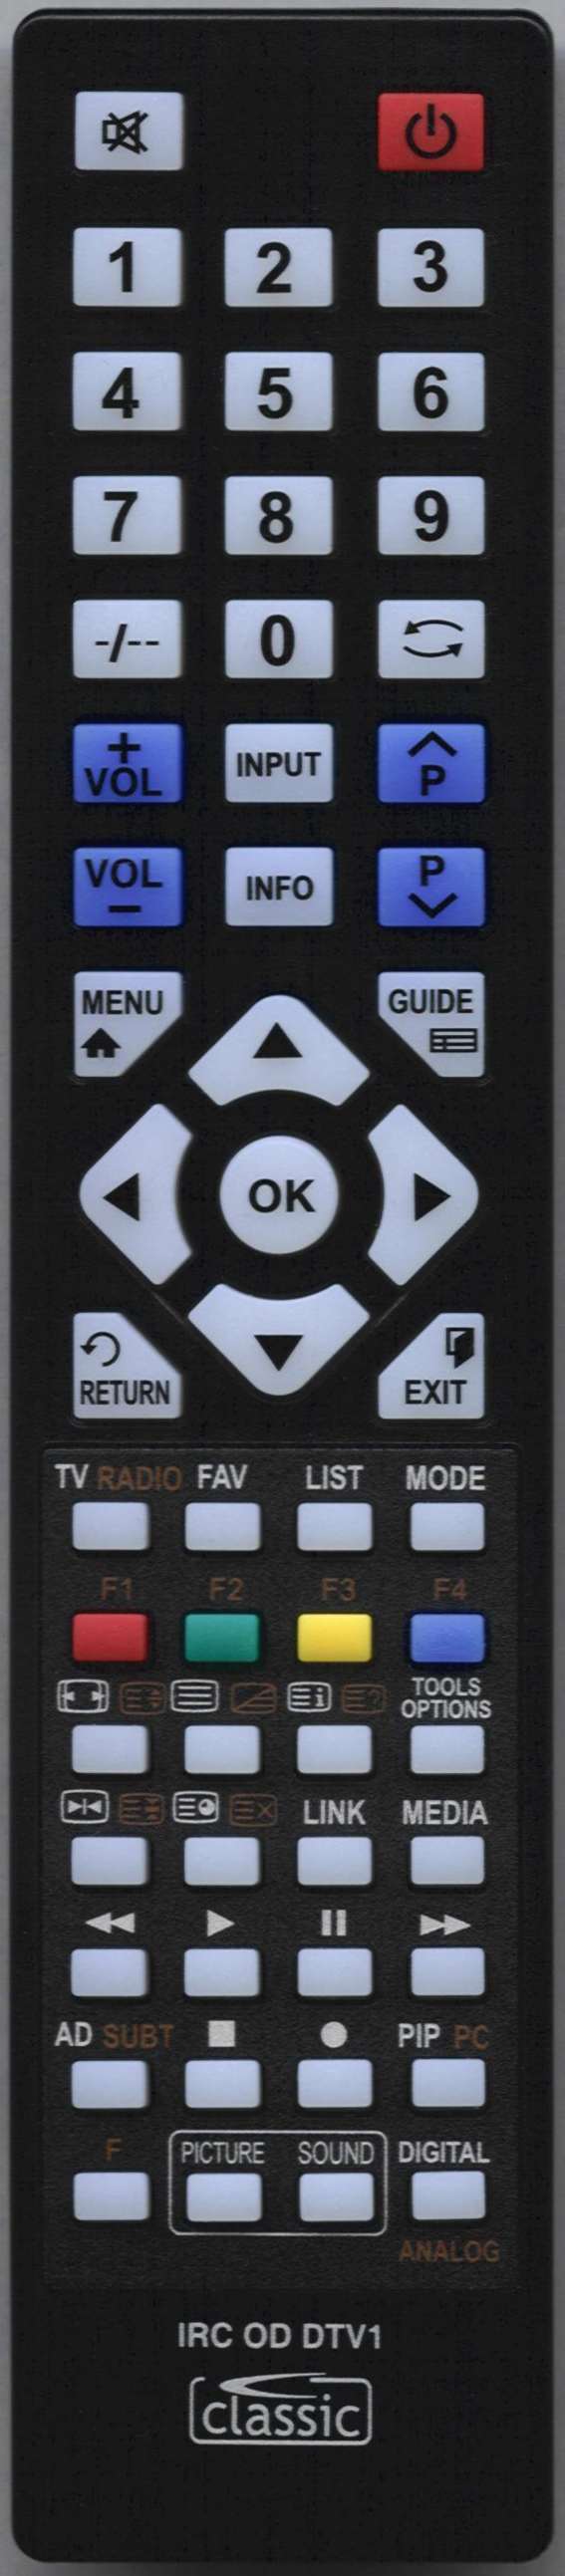 BEKO RC 12.5 Remote Control Alternative 